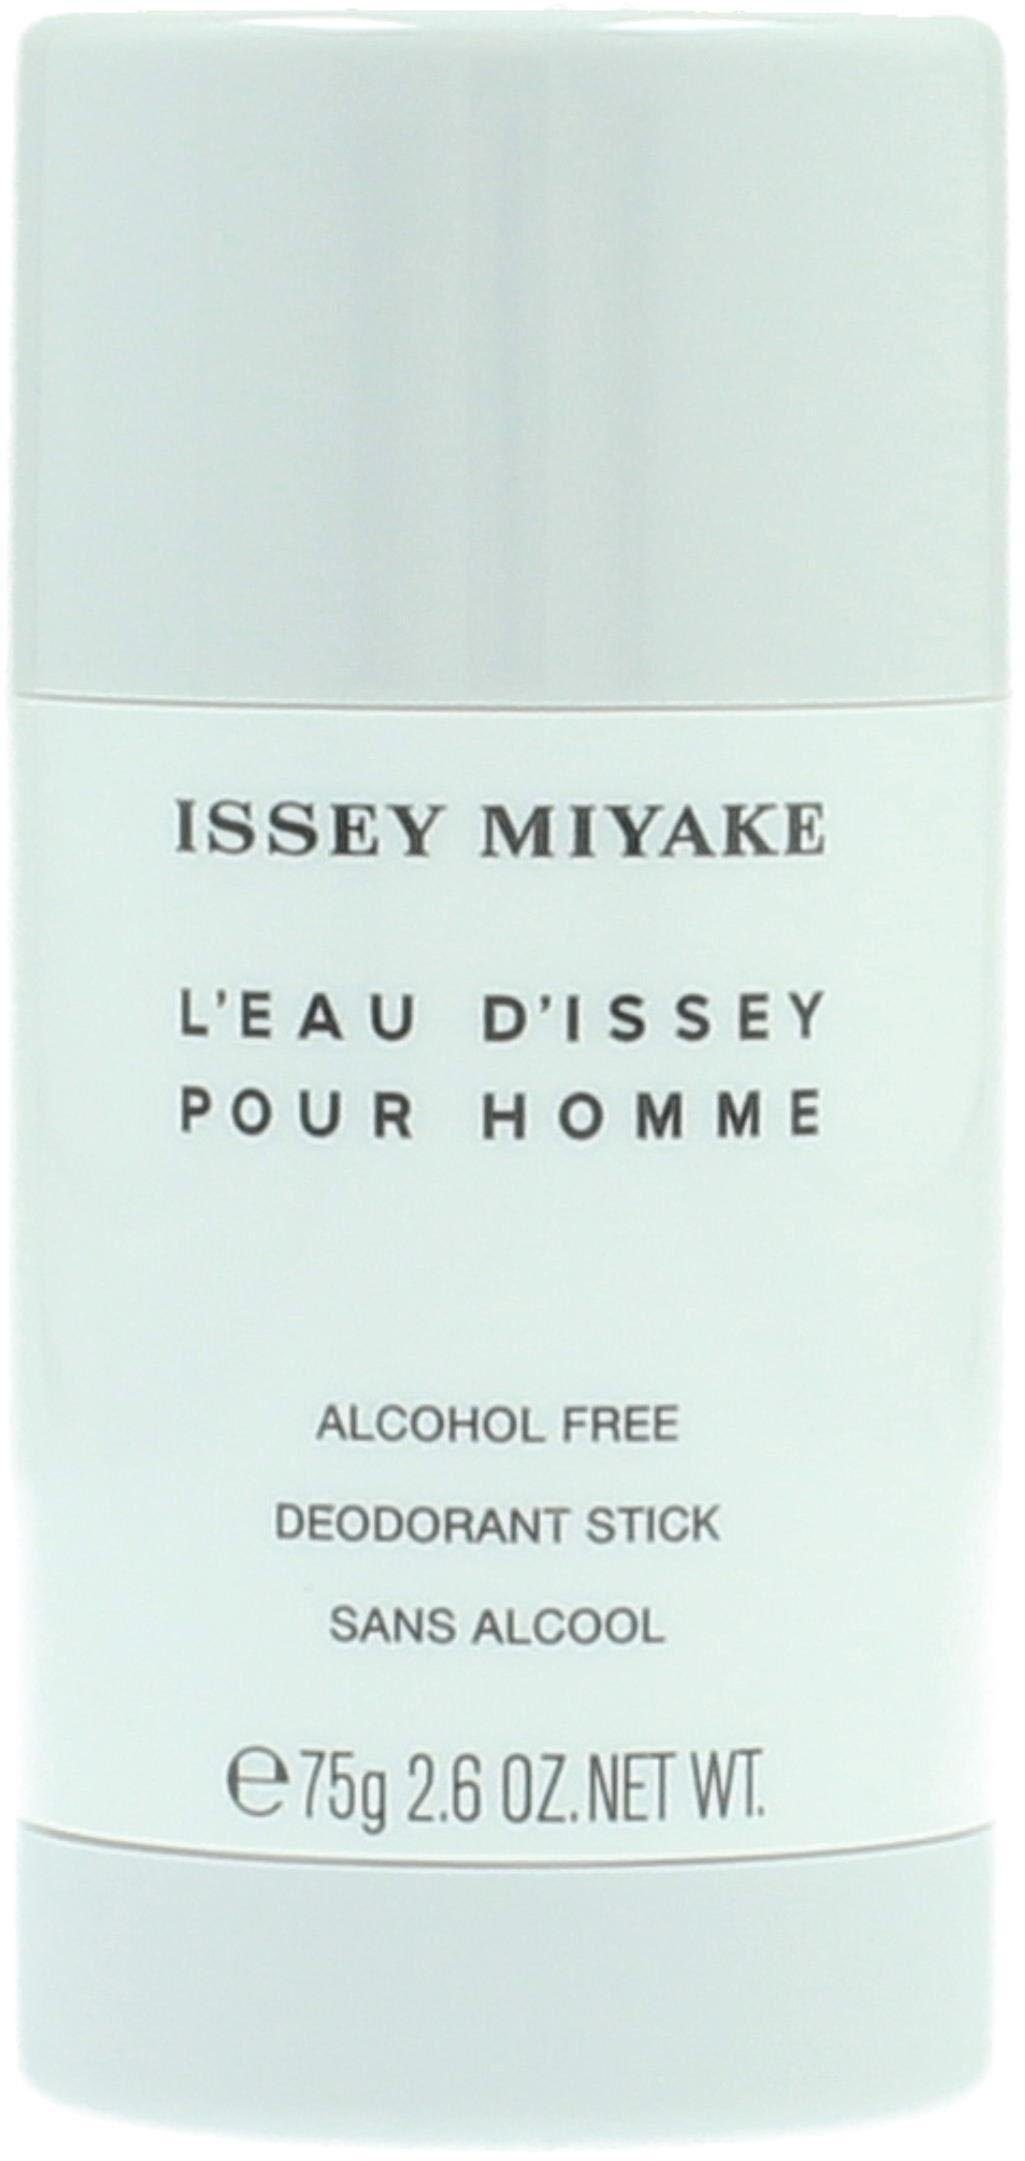 Issey Miyake Gesichtsmaske Issey Miyake L'Eau D'Issey Pour Homme Deo Stick  75gr, item_display_volume; 75.0 milliliters